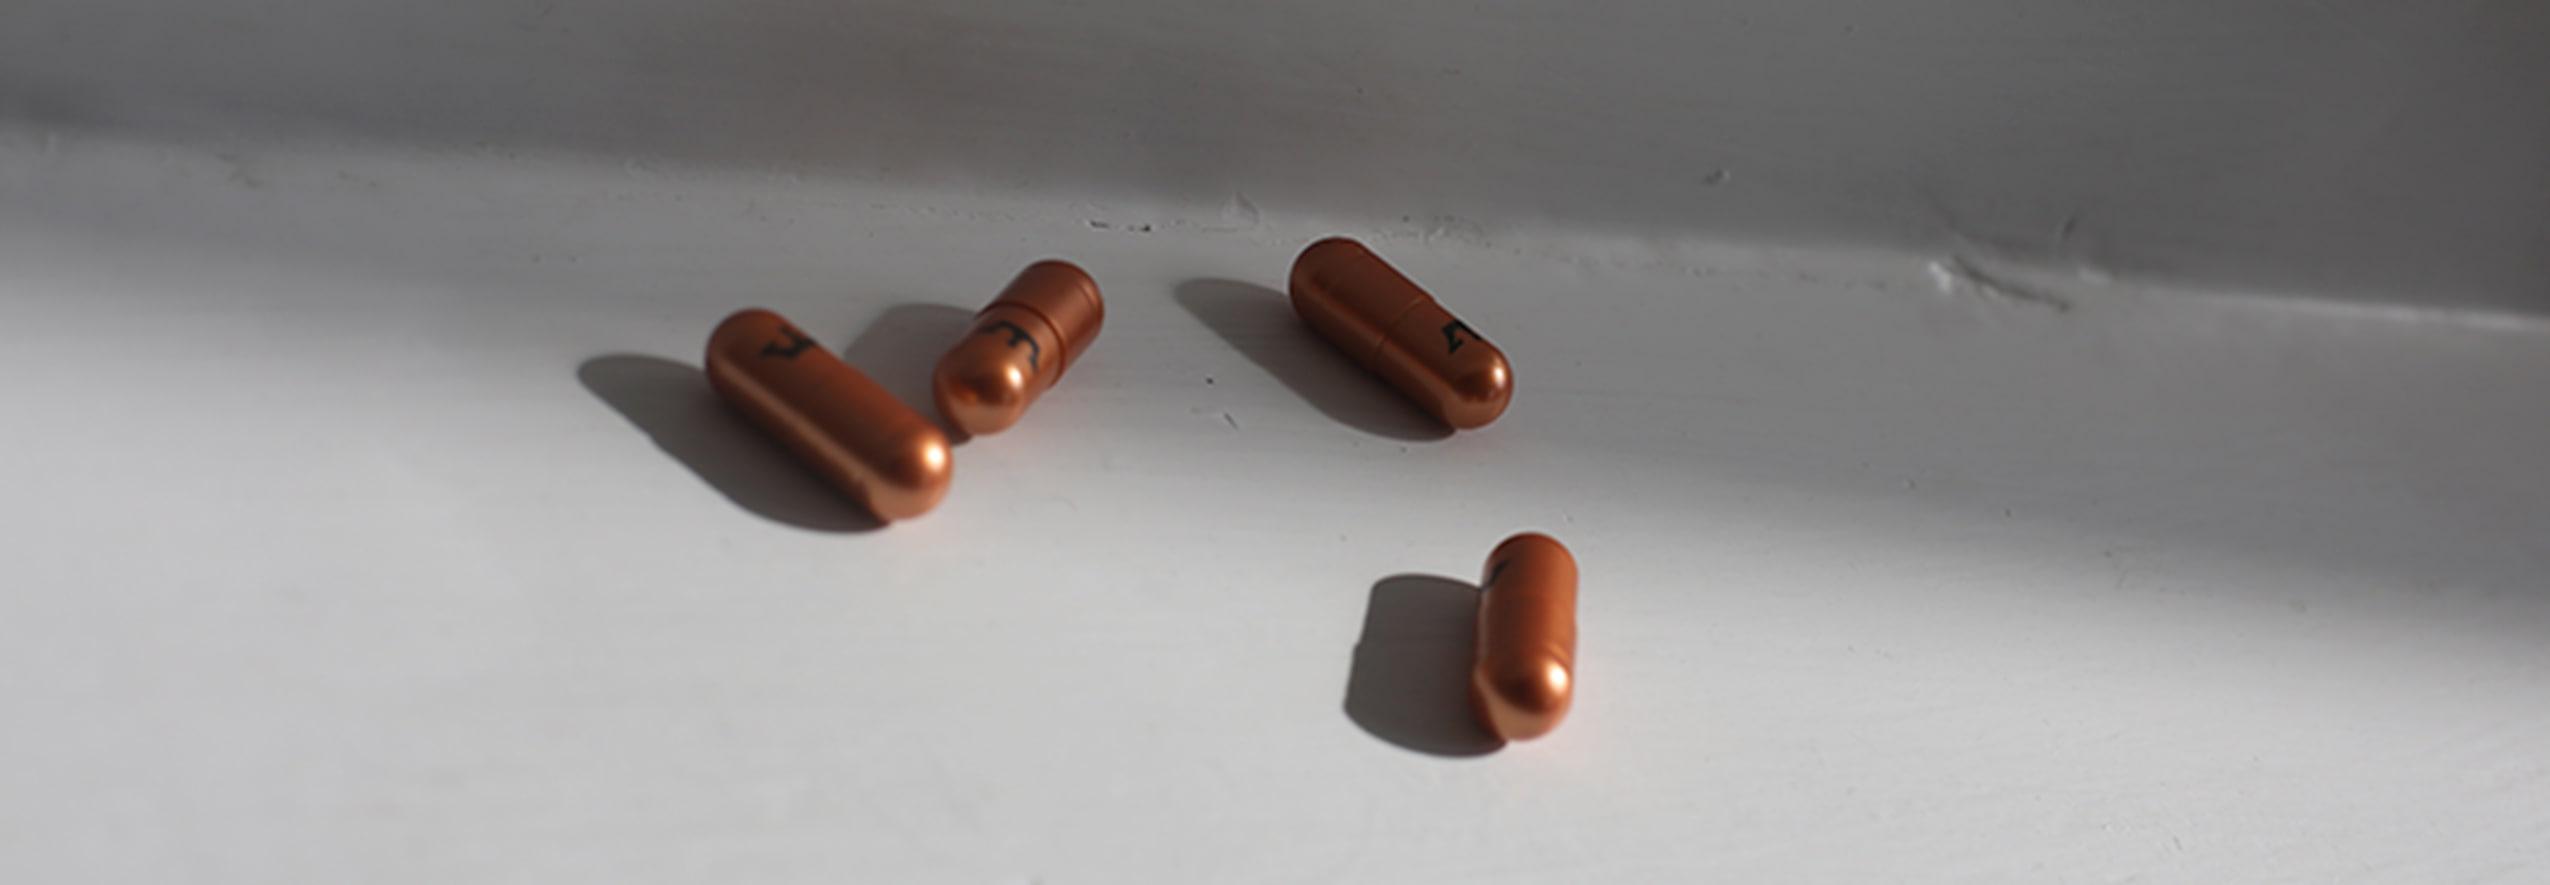 skin vitamin pills on white background